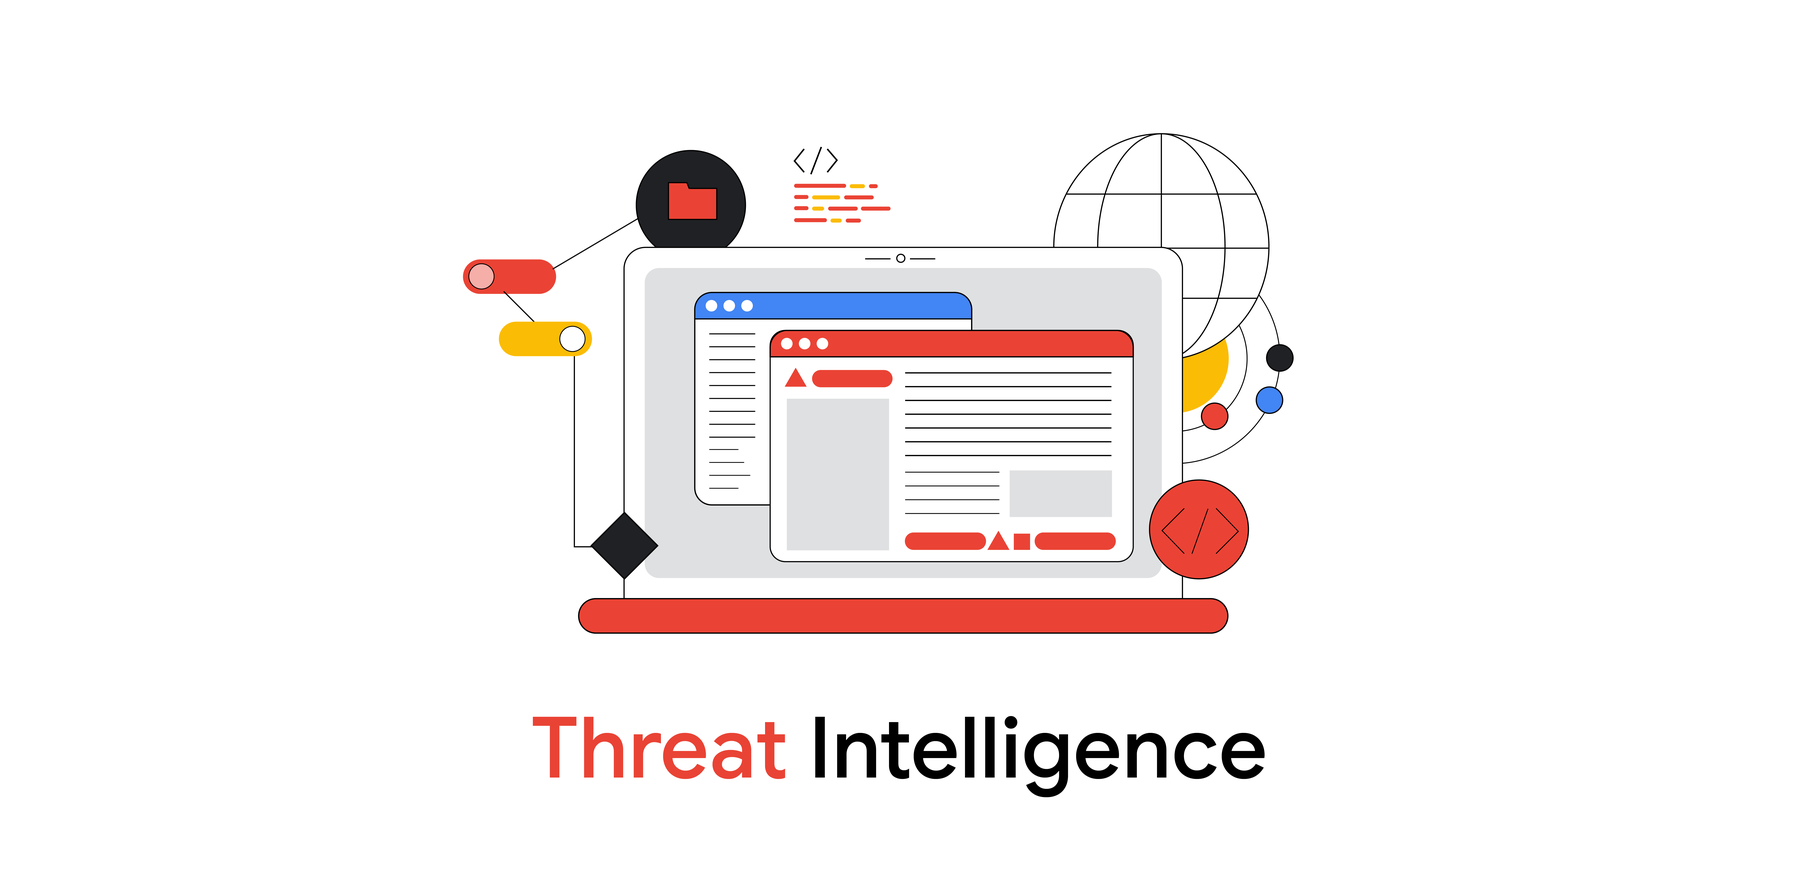 https://storage.googleapis.com/gweb-cloudblog-publish/images/threat-intelligence-default-banner-simplif.max-1800x1800.png